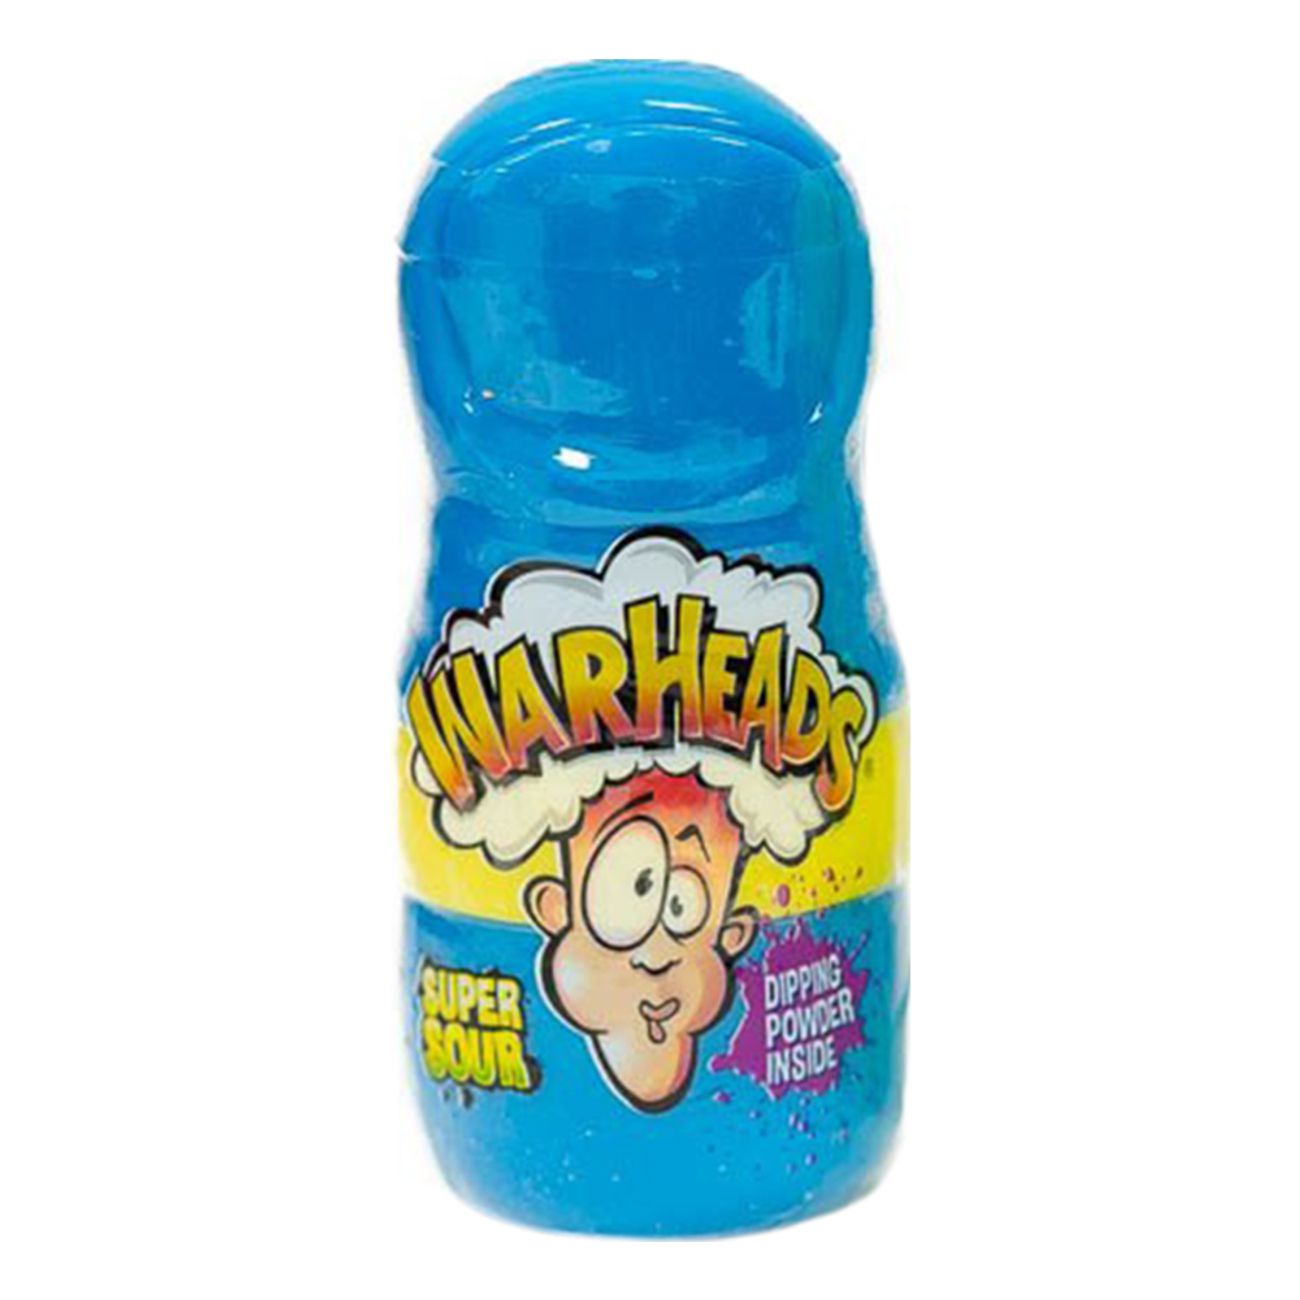 warheads-thumb-dipper-super-sour-92845-2